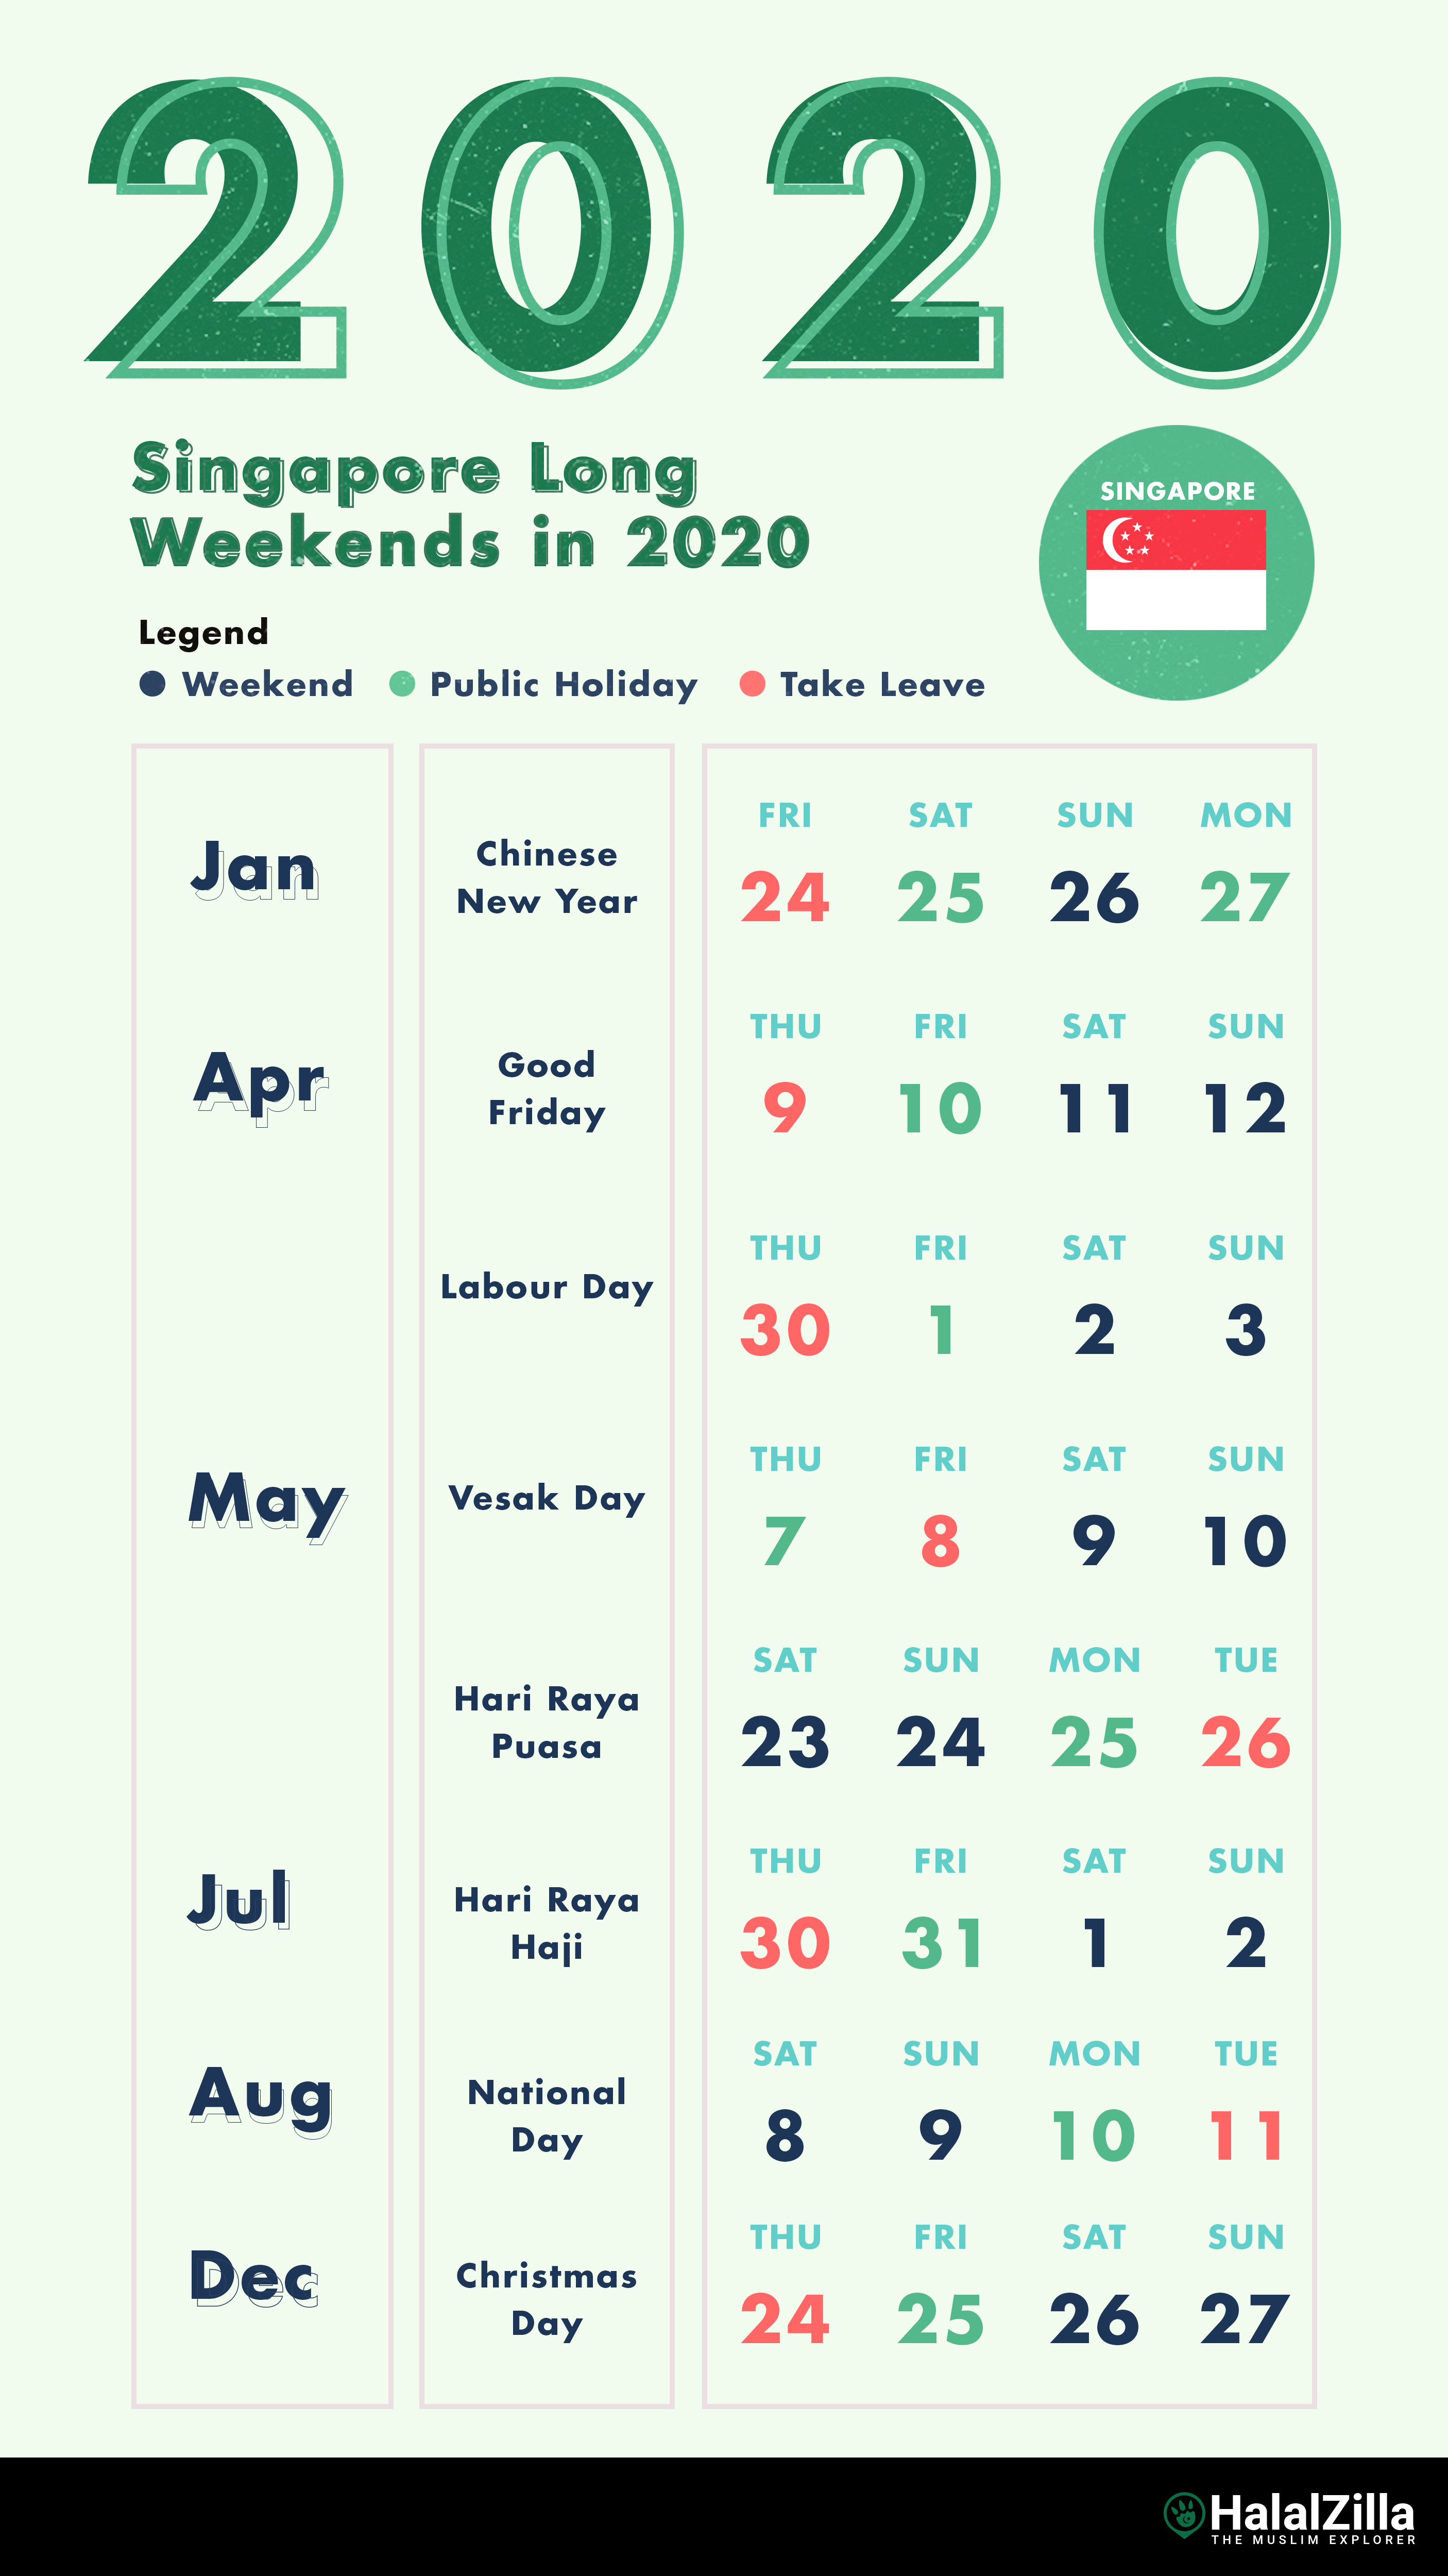 8 Long Weekends in Singapore in 2020 - HalalZilla